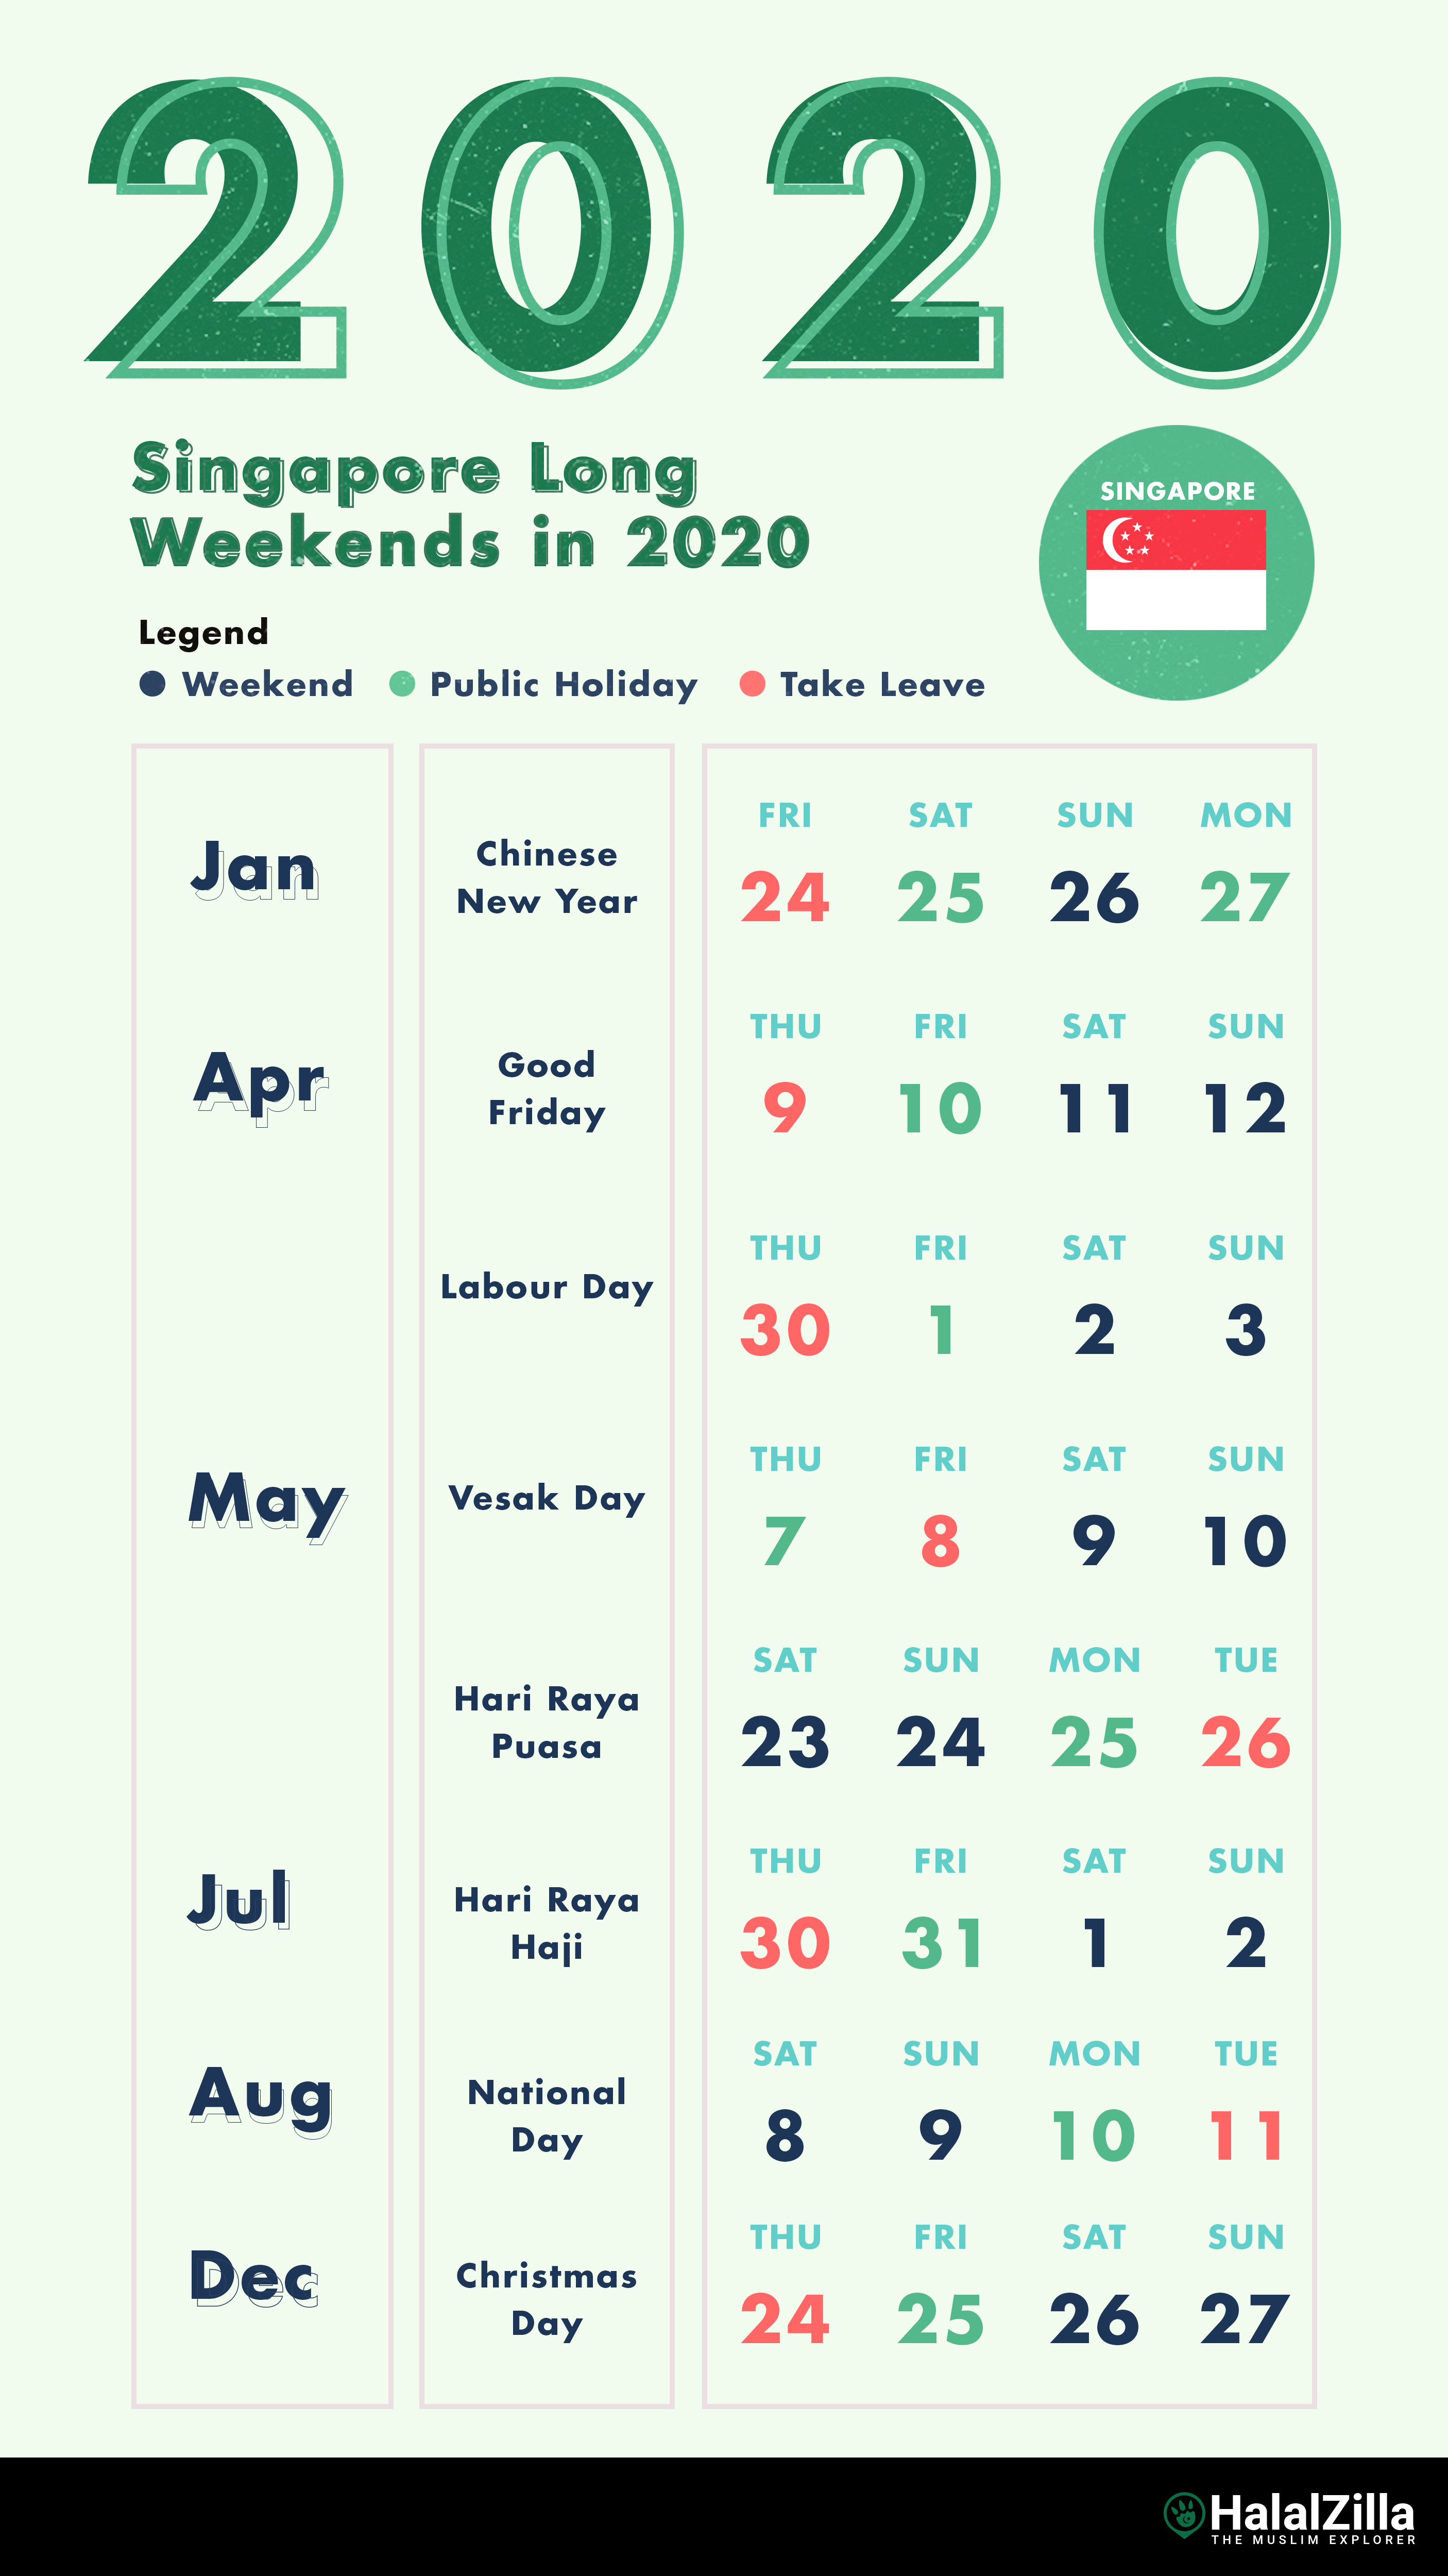 8 Long Weekends in Singapore in 2020 - HalalZilla